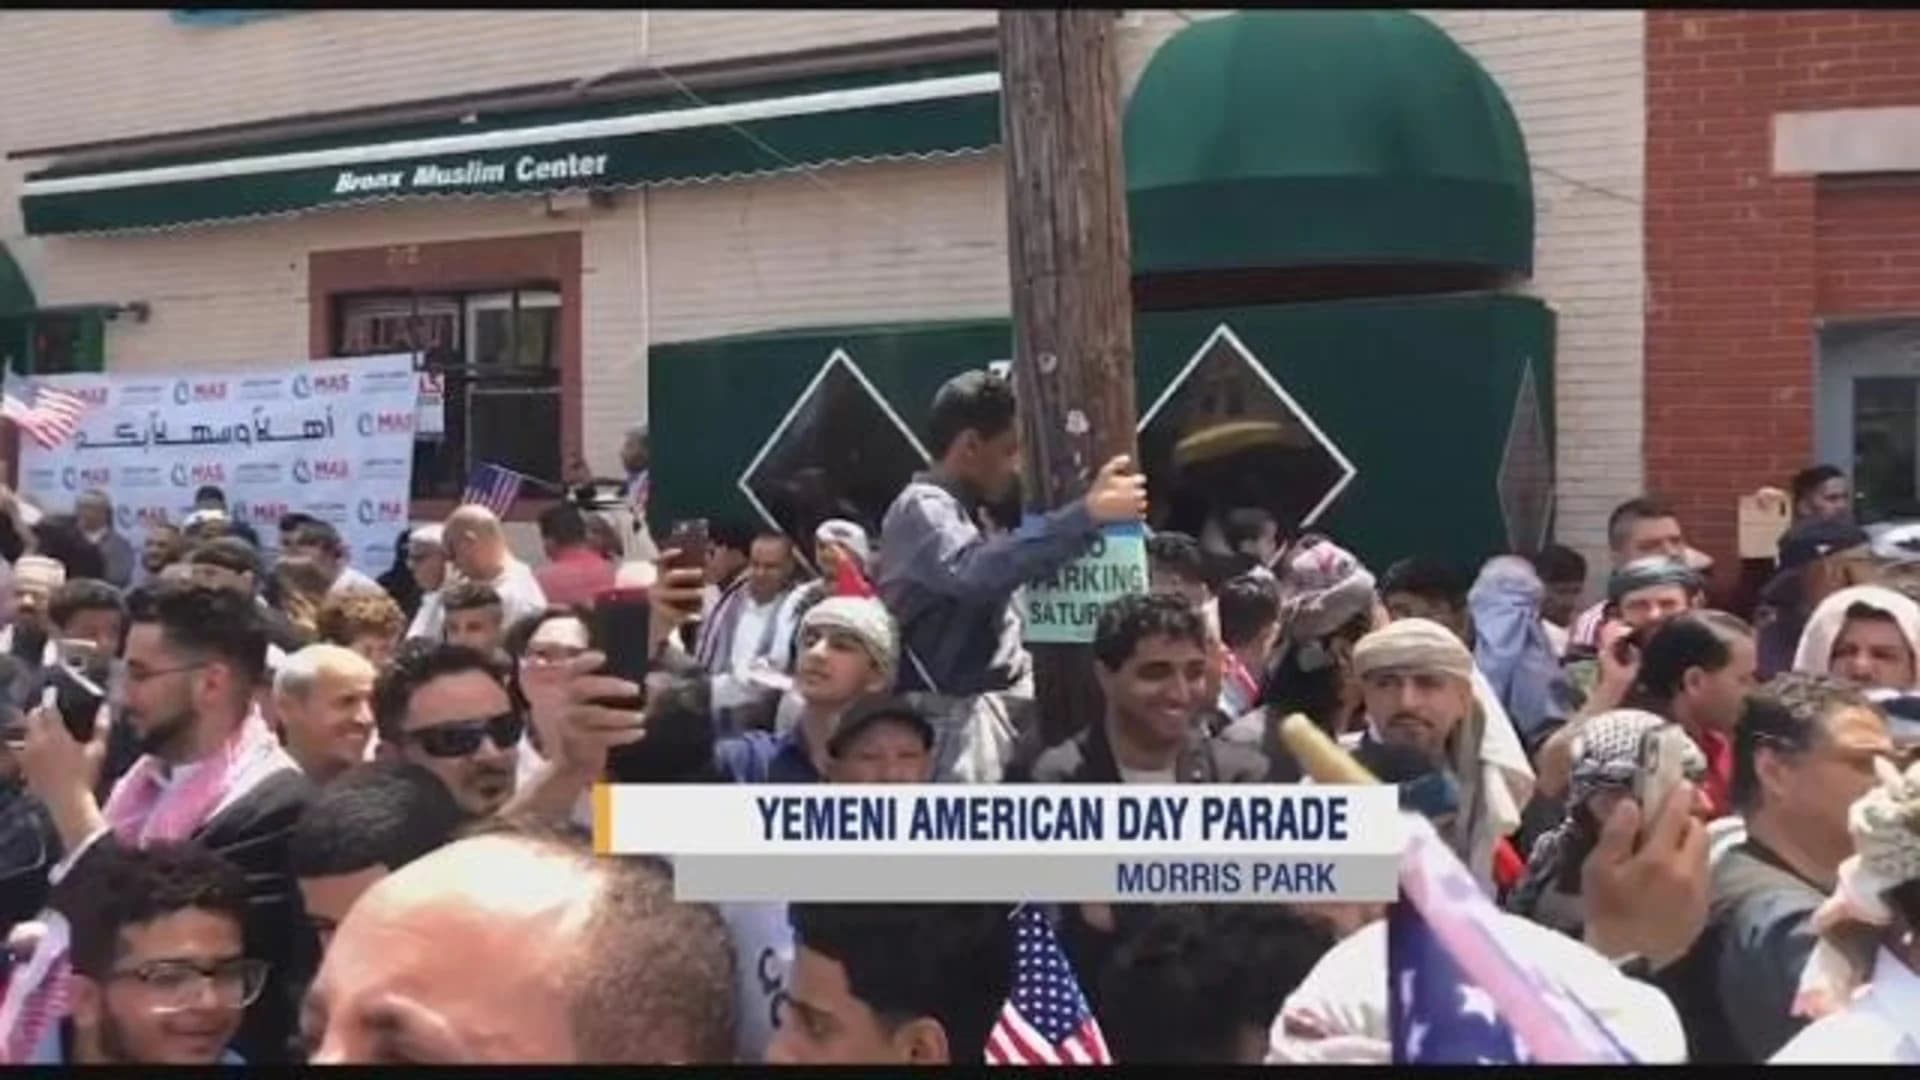 Yemeni Americans celebrate heritage with parade in Morris Park